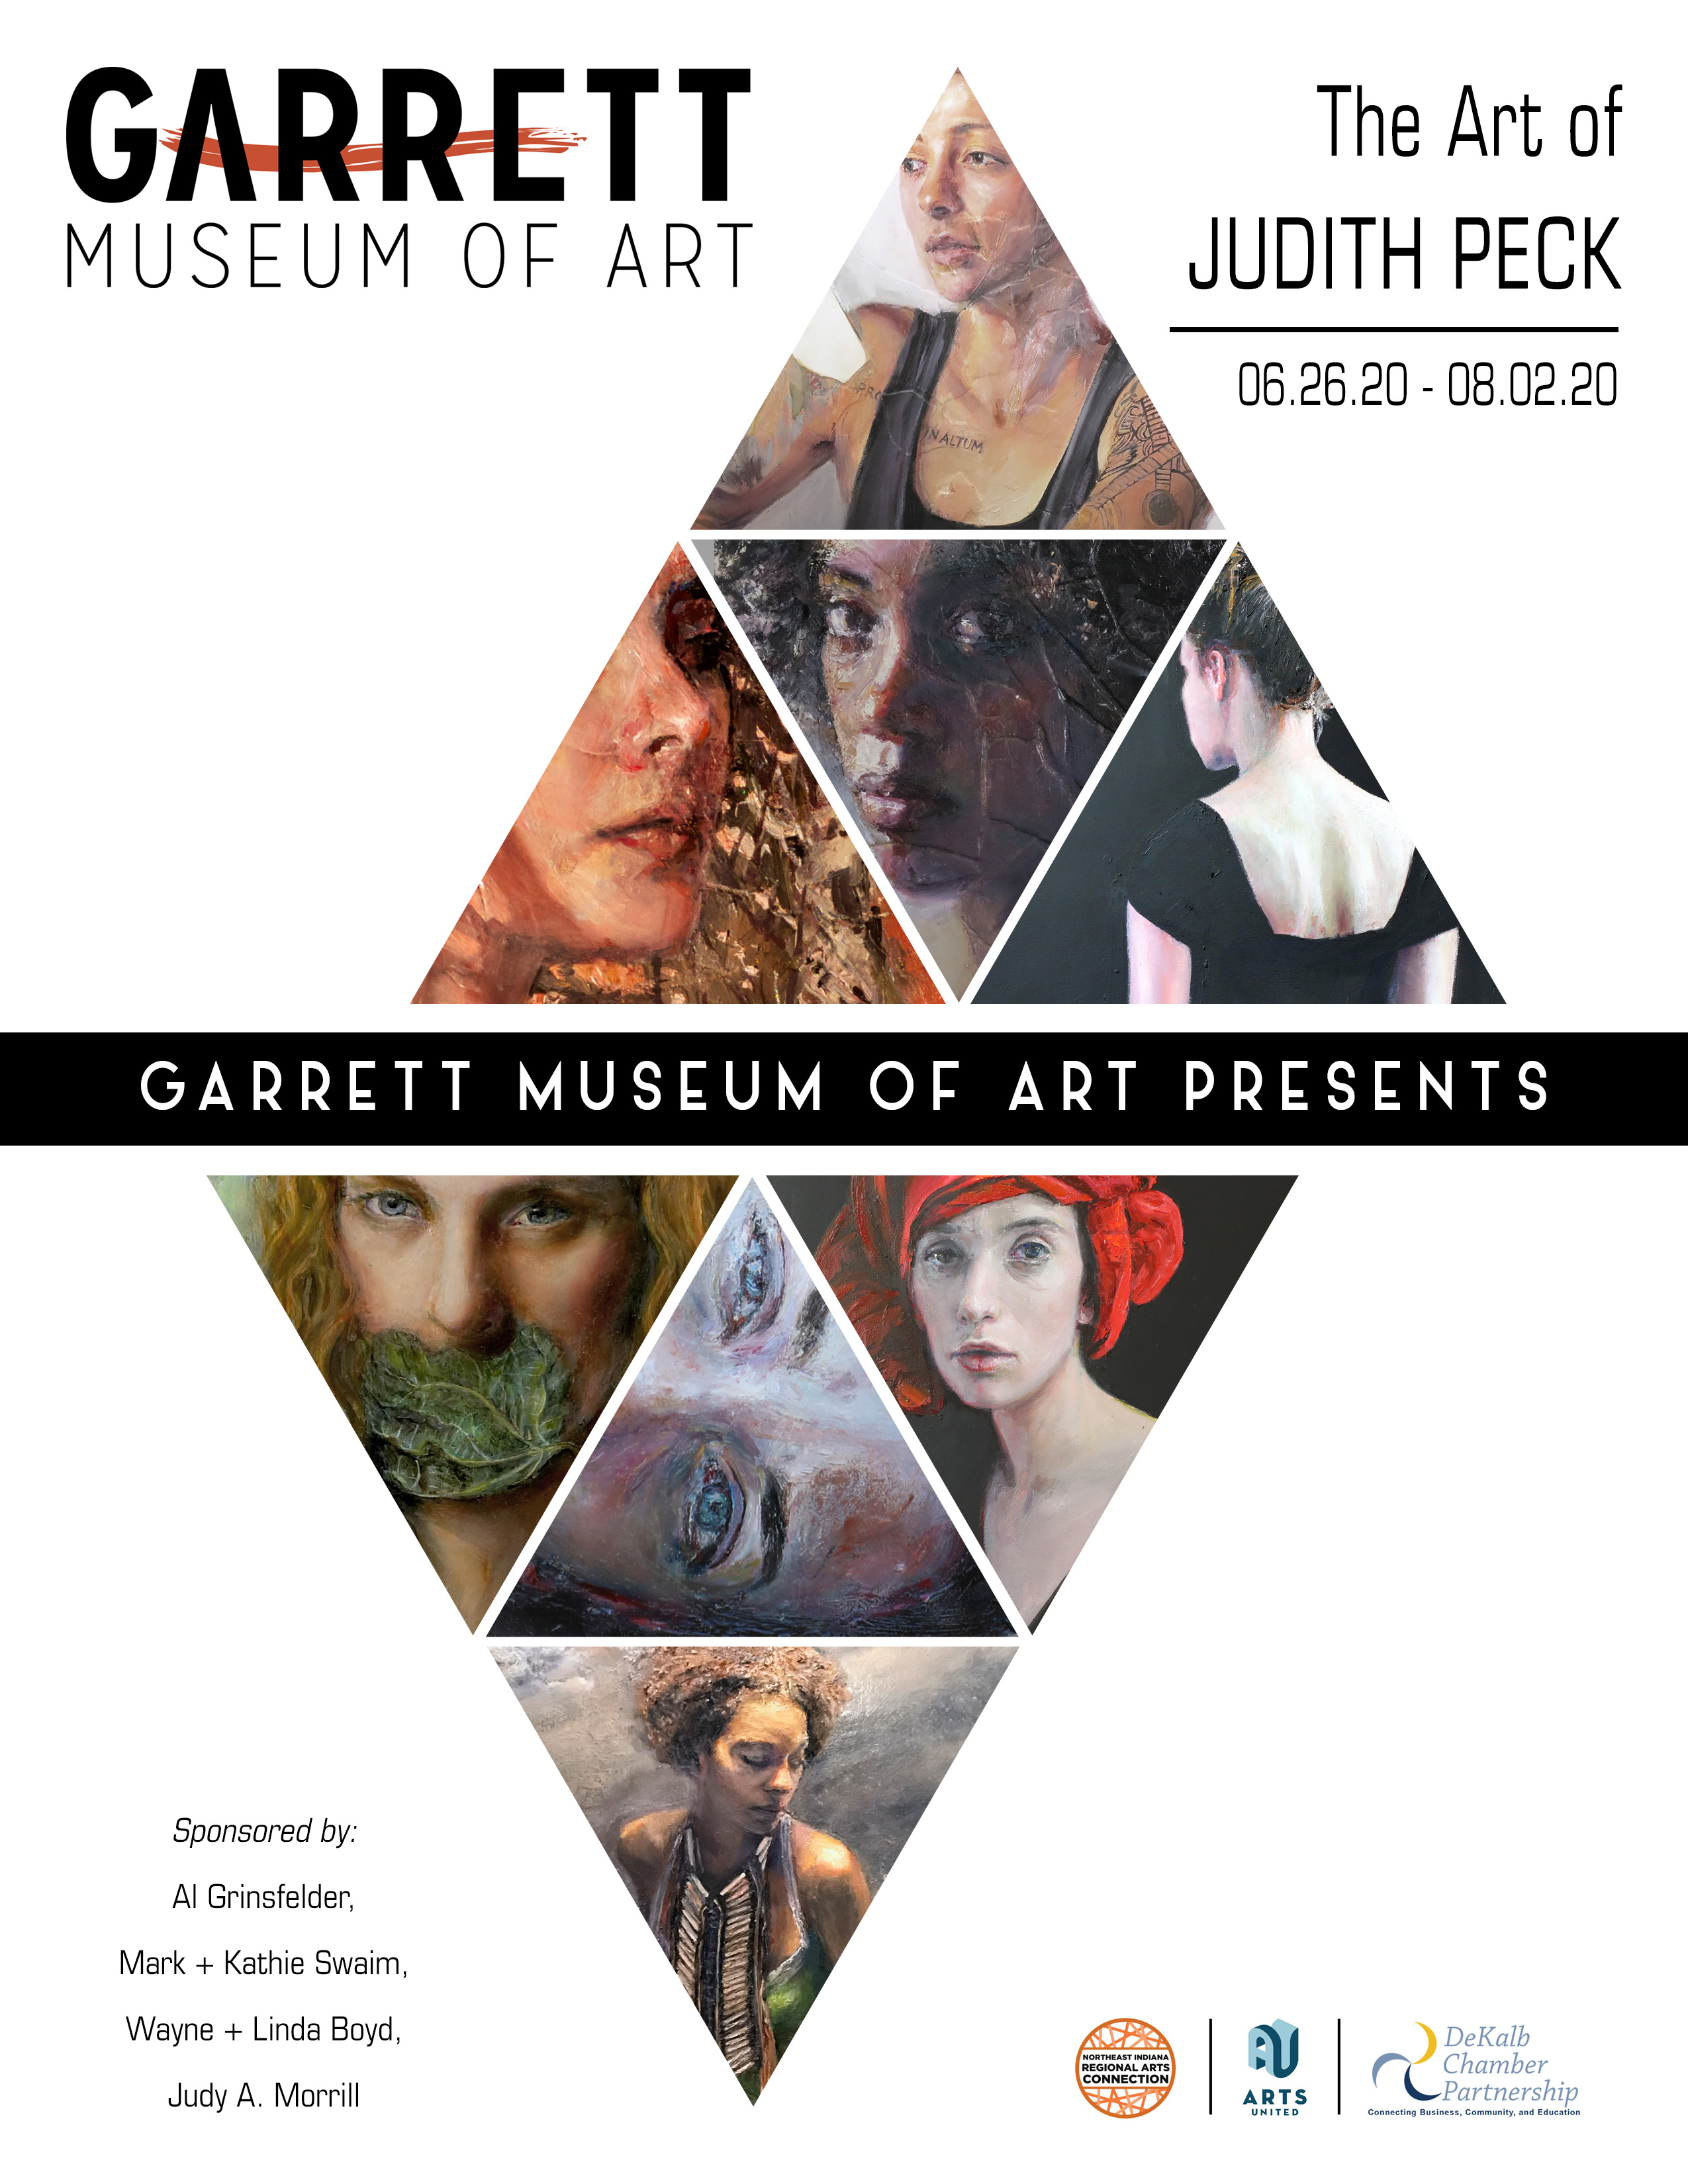 Garrett Museum of Art presents the Art of Judith Peck